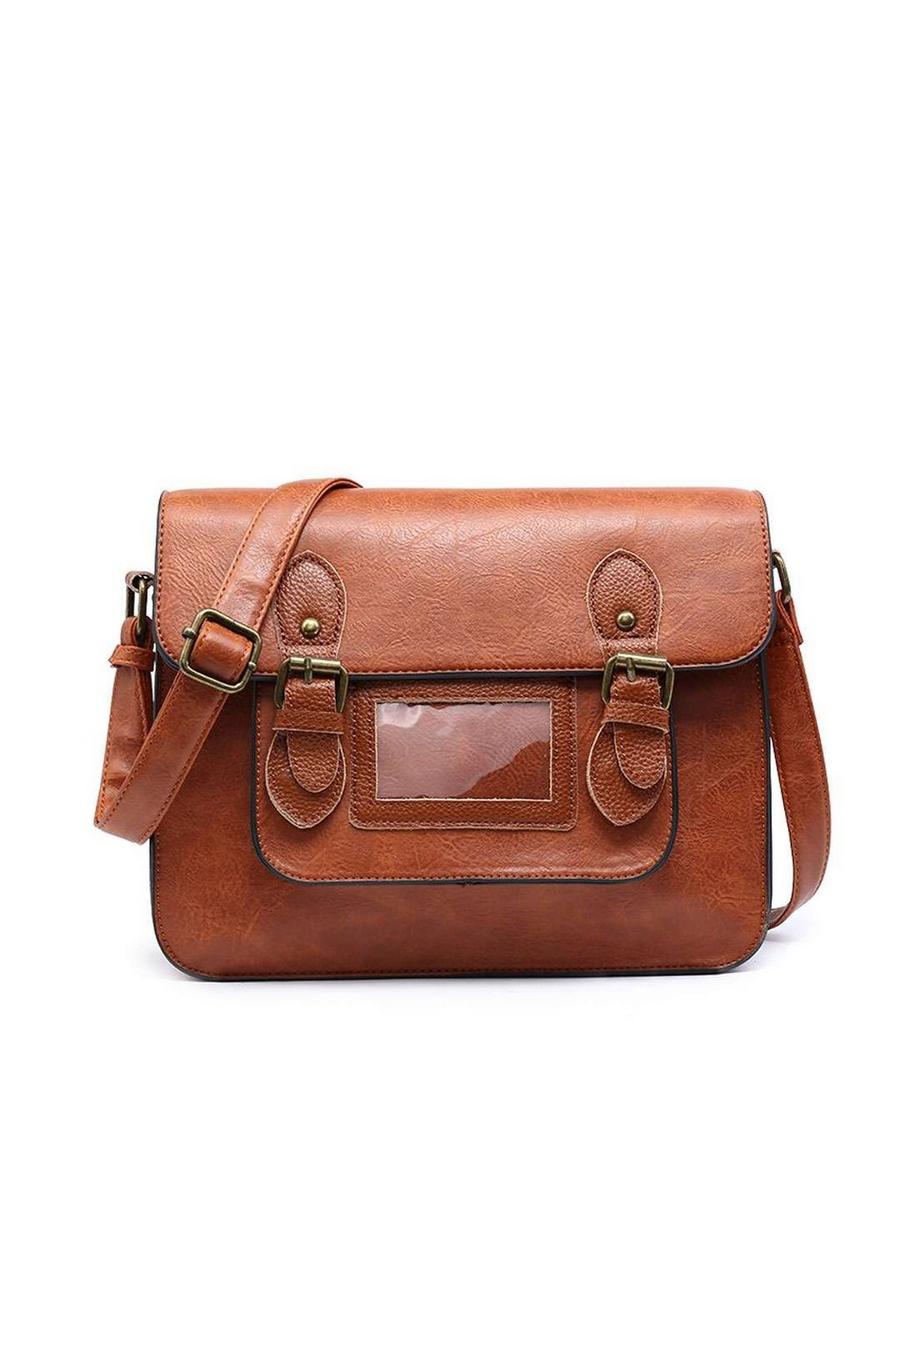 Tan Roomy Satchel Handbag Work School Shoulder Crossbody Bag